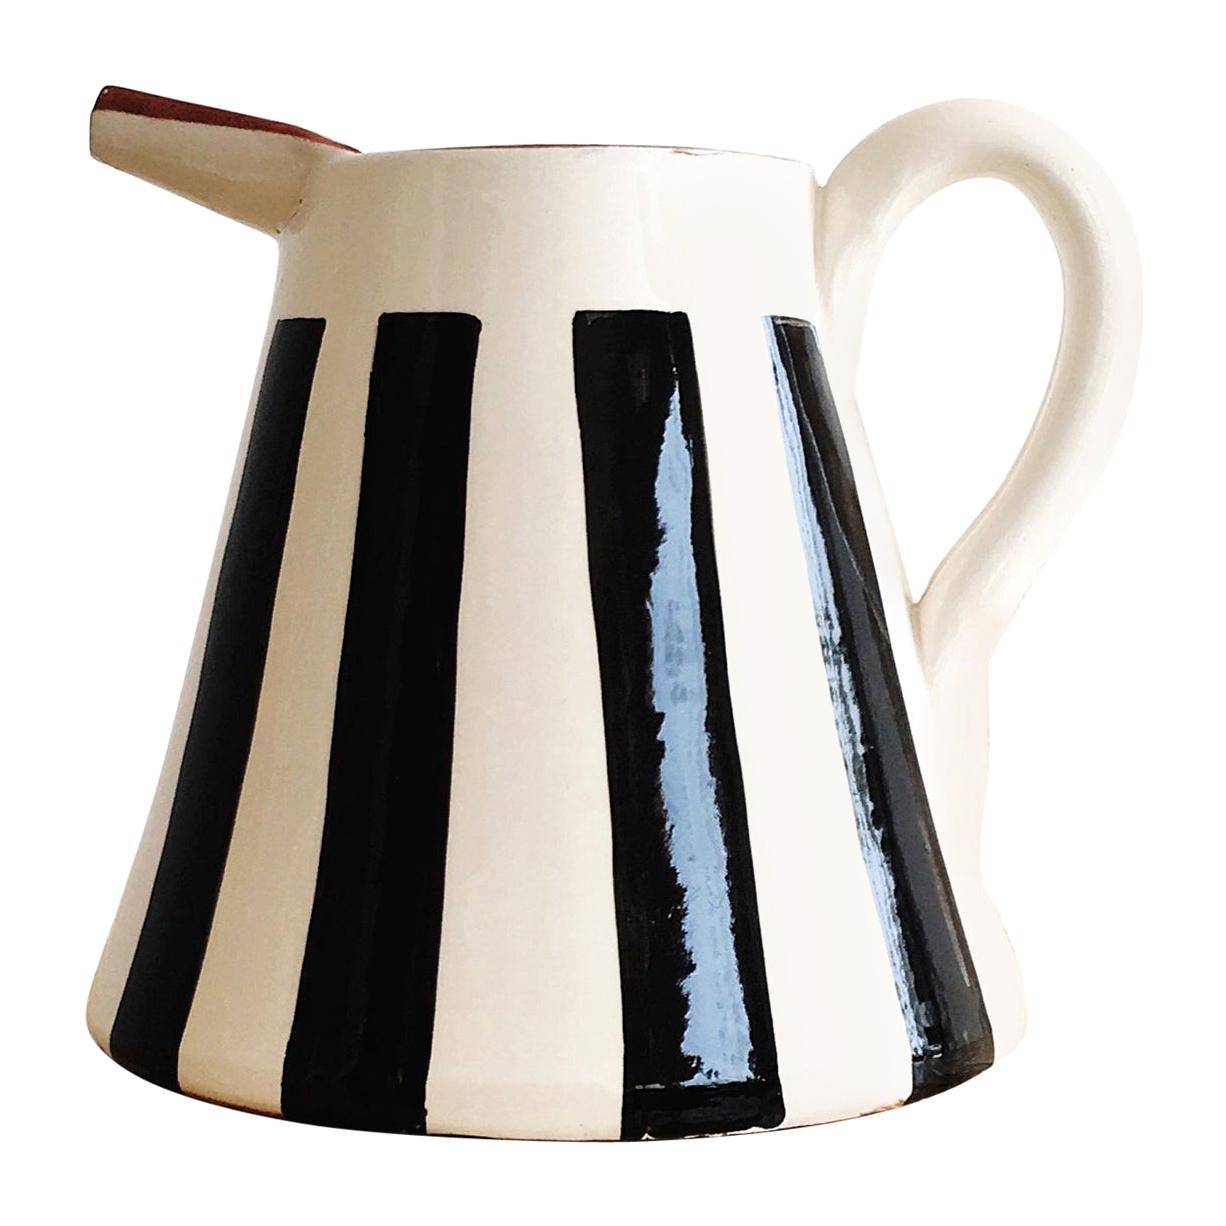 Handmade Ceramic Medium Pitcher with Graphic Black and White Design, in Stock